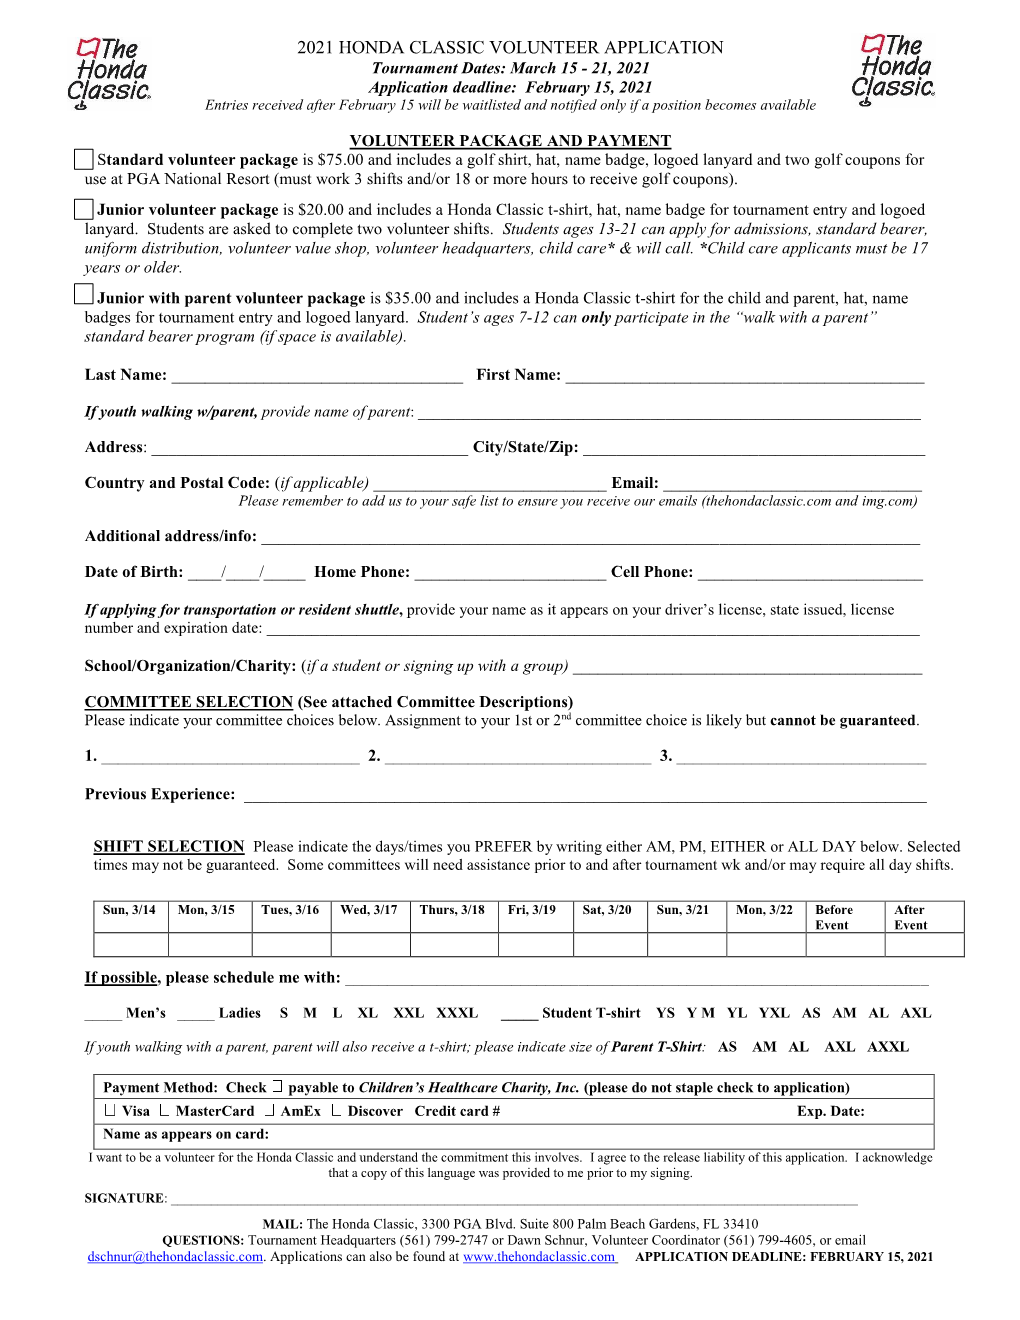 2021 Honda Classic Volunteer Application